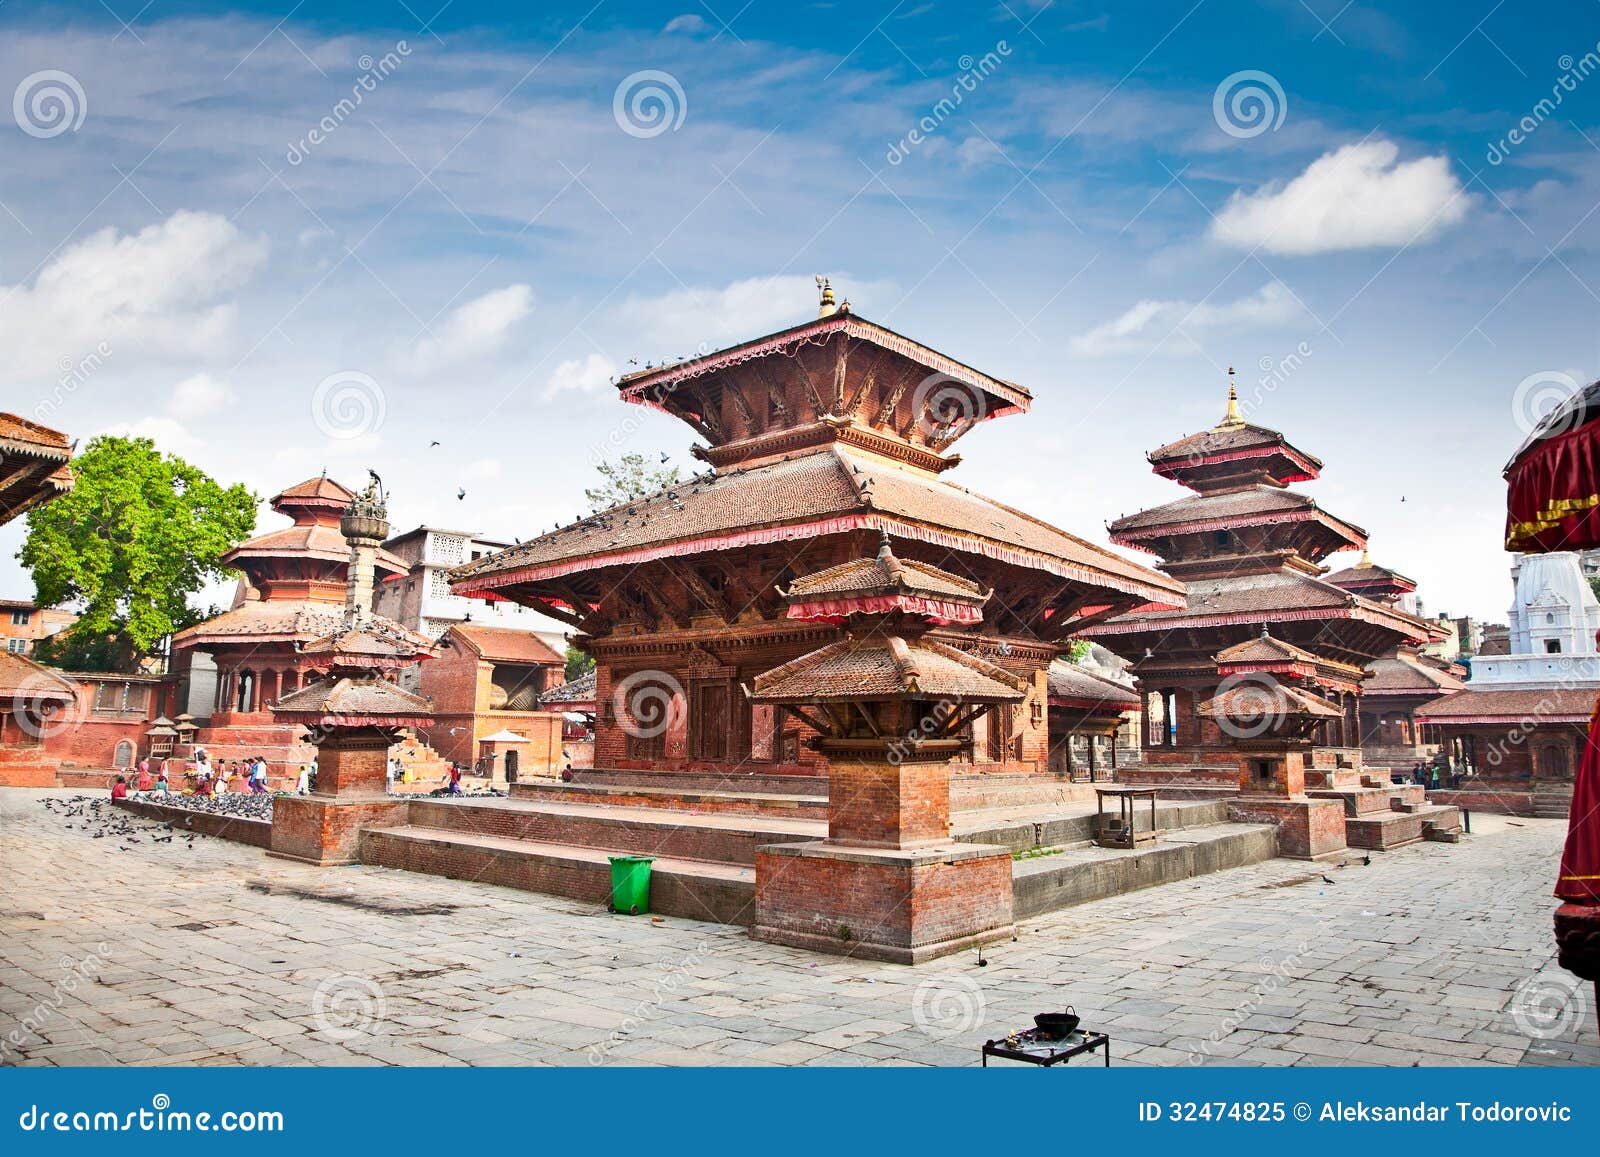 durbar square in kathmandu valley, nepal.